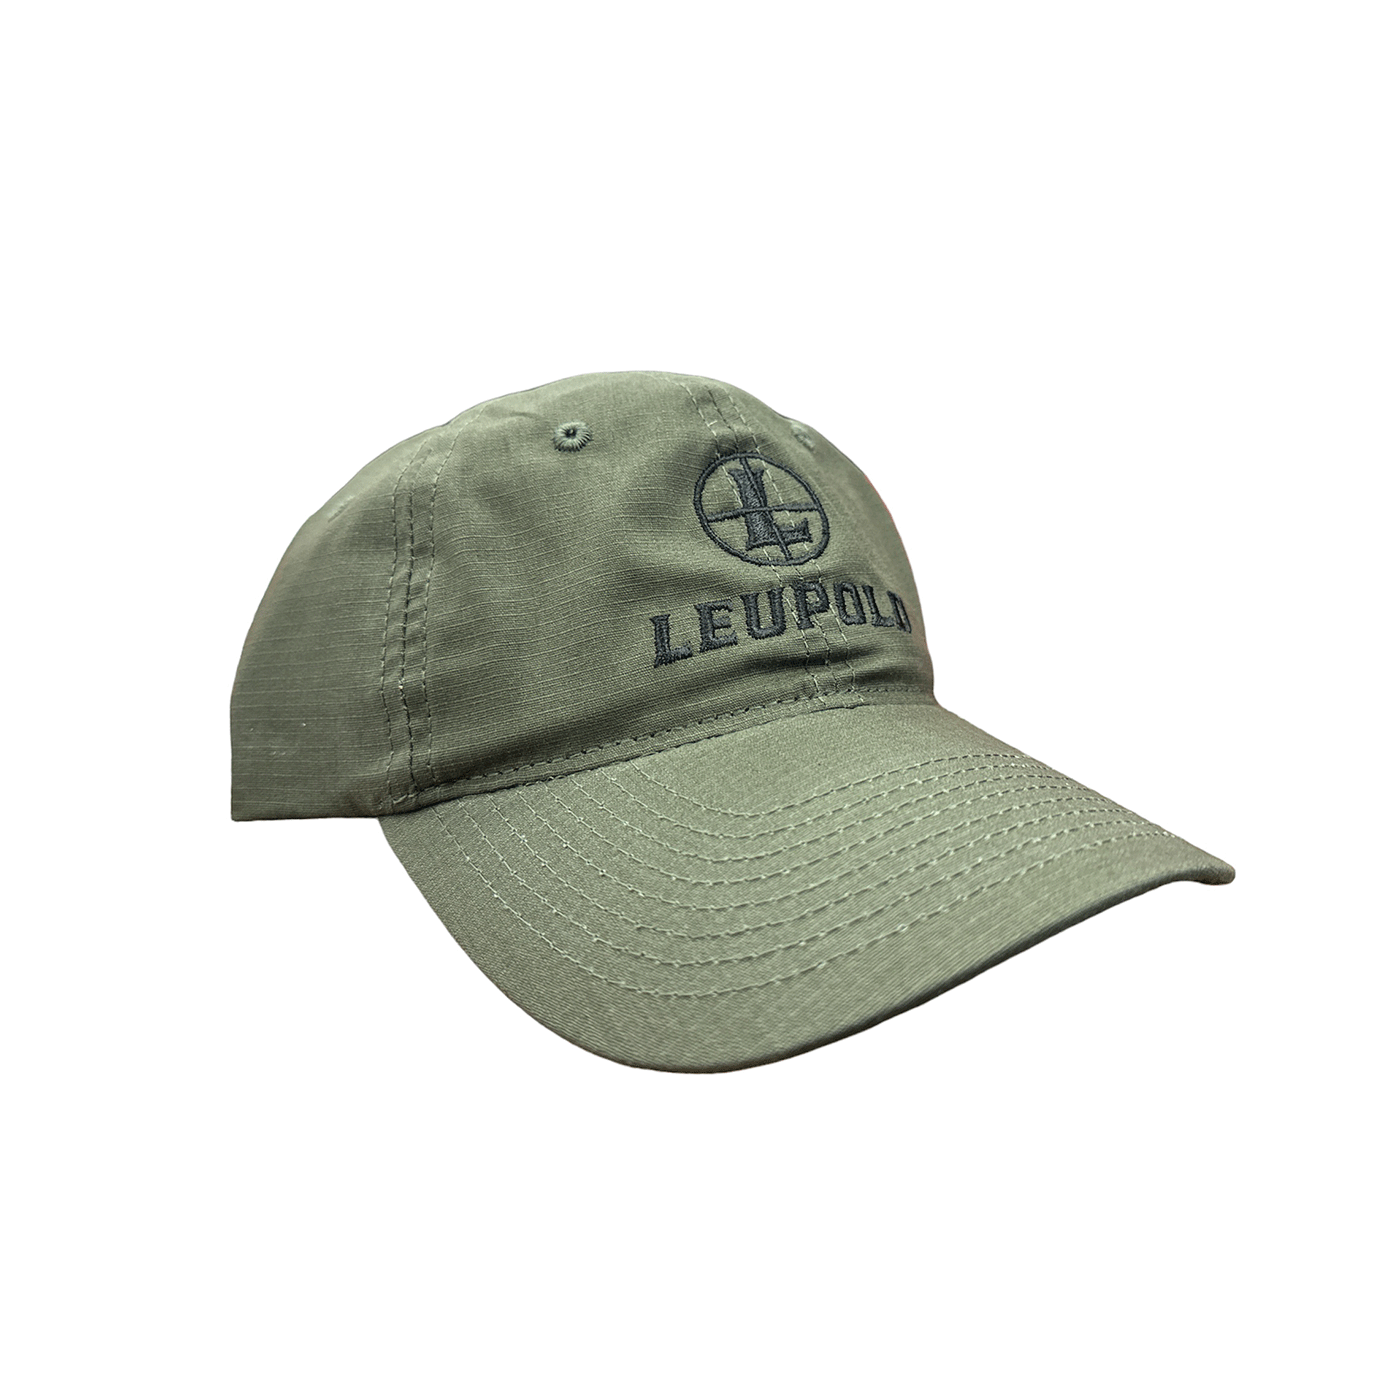 HAT - LEUPOLD - Green/Black (ADJUSTABLE WITH VELCRO)